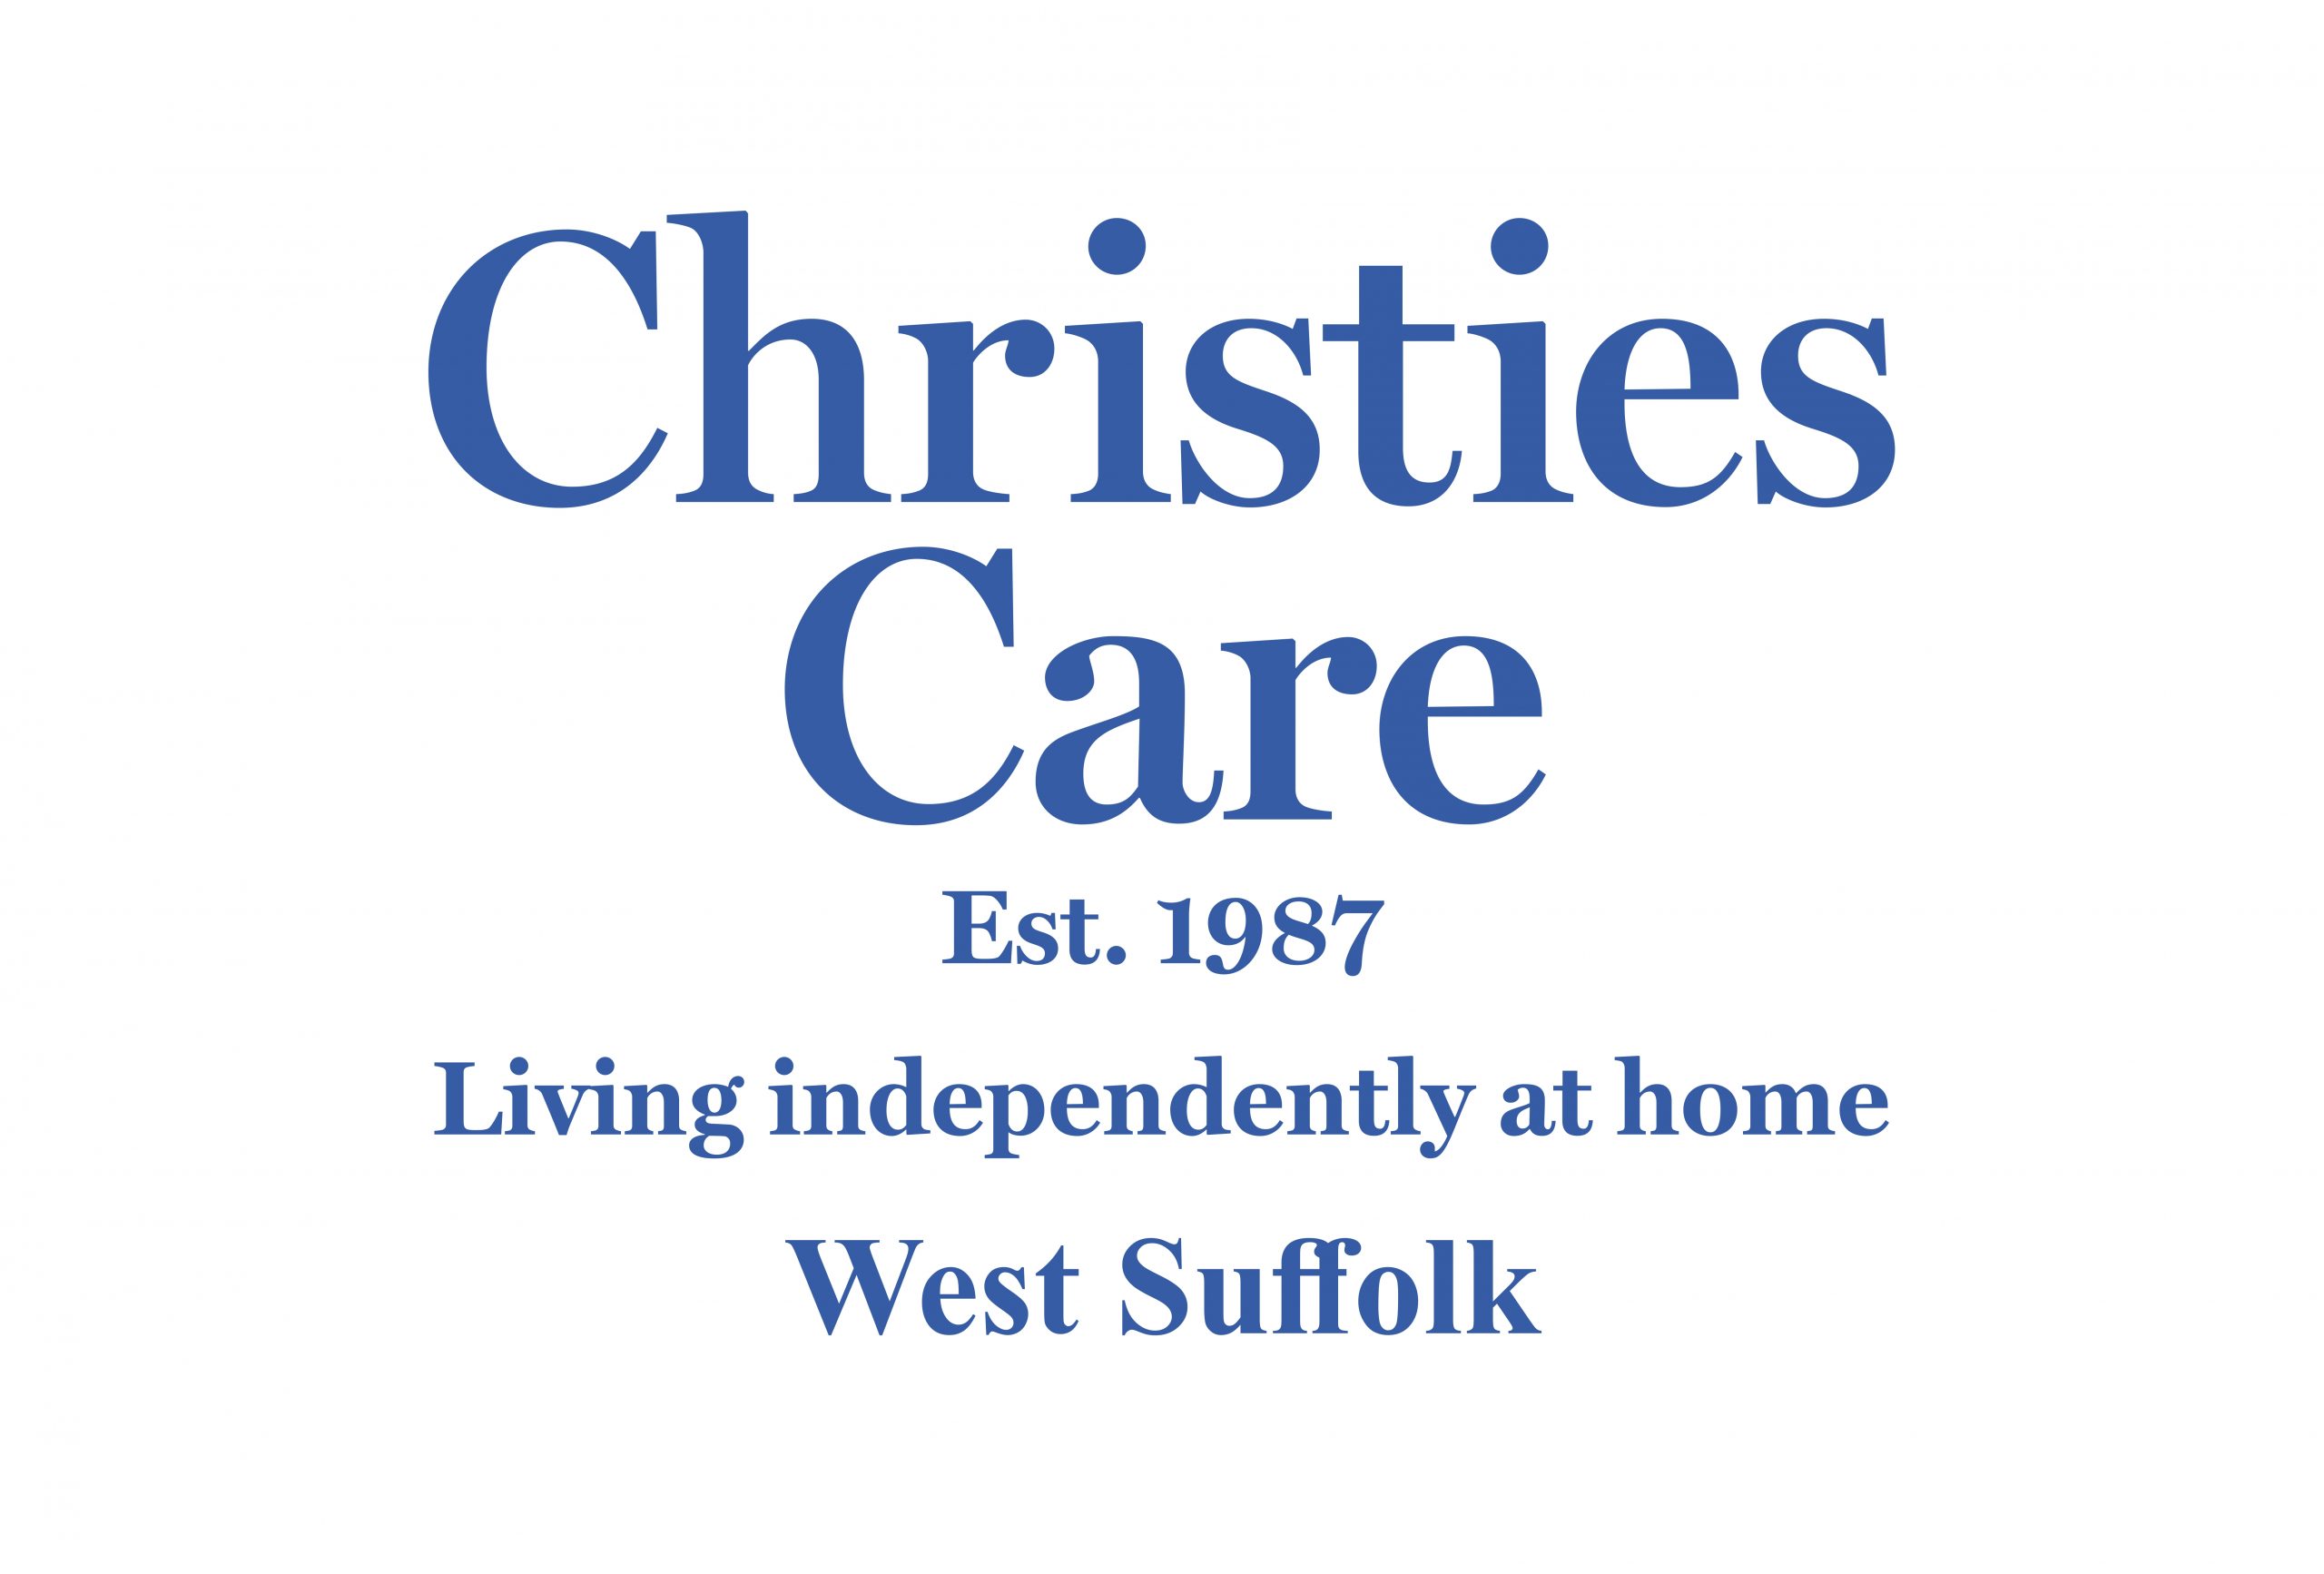 Christies Care